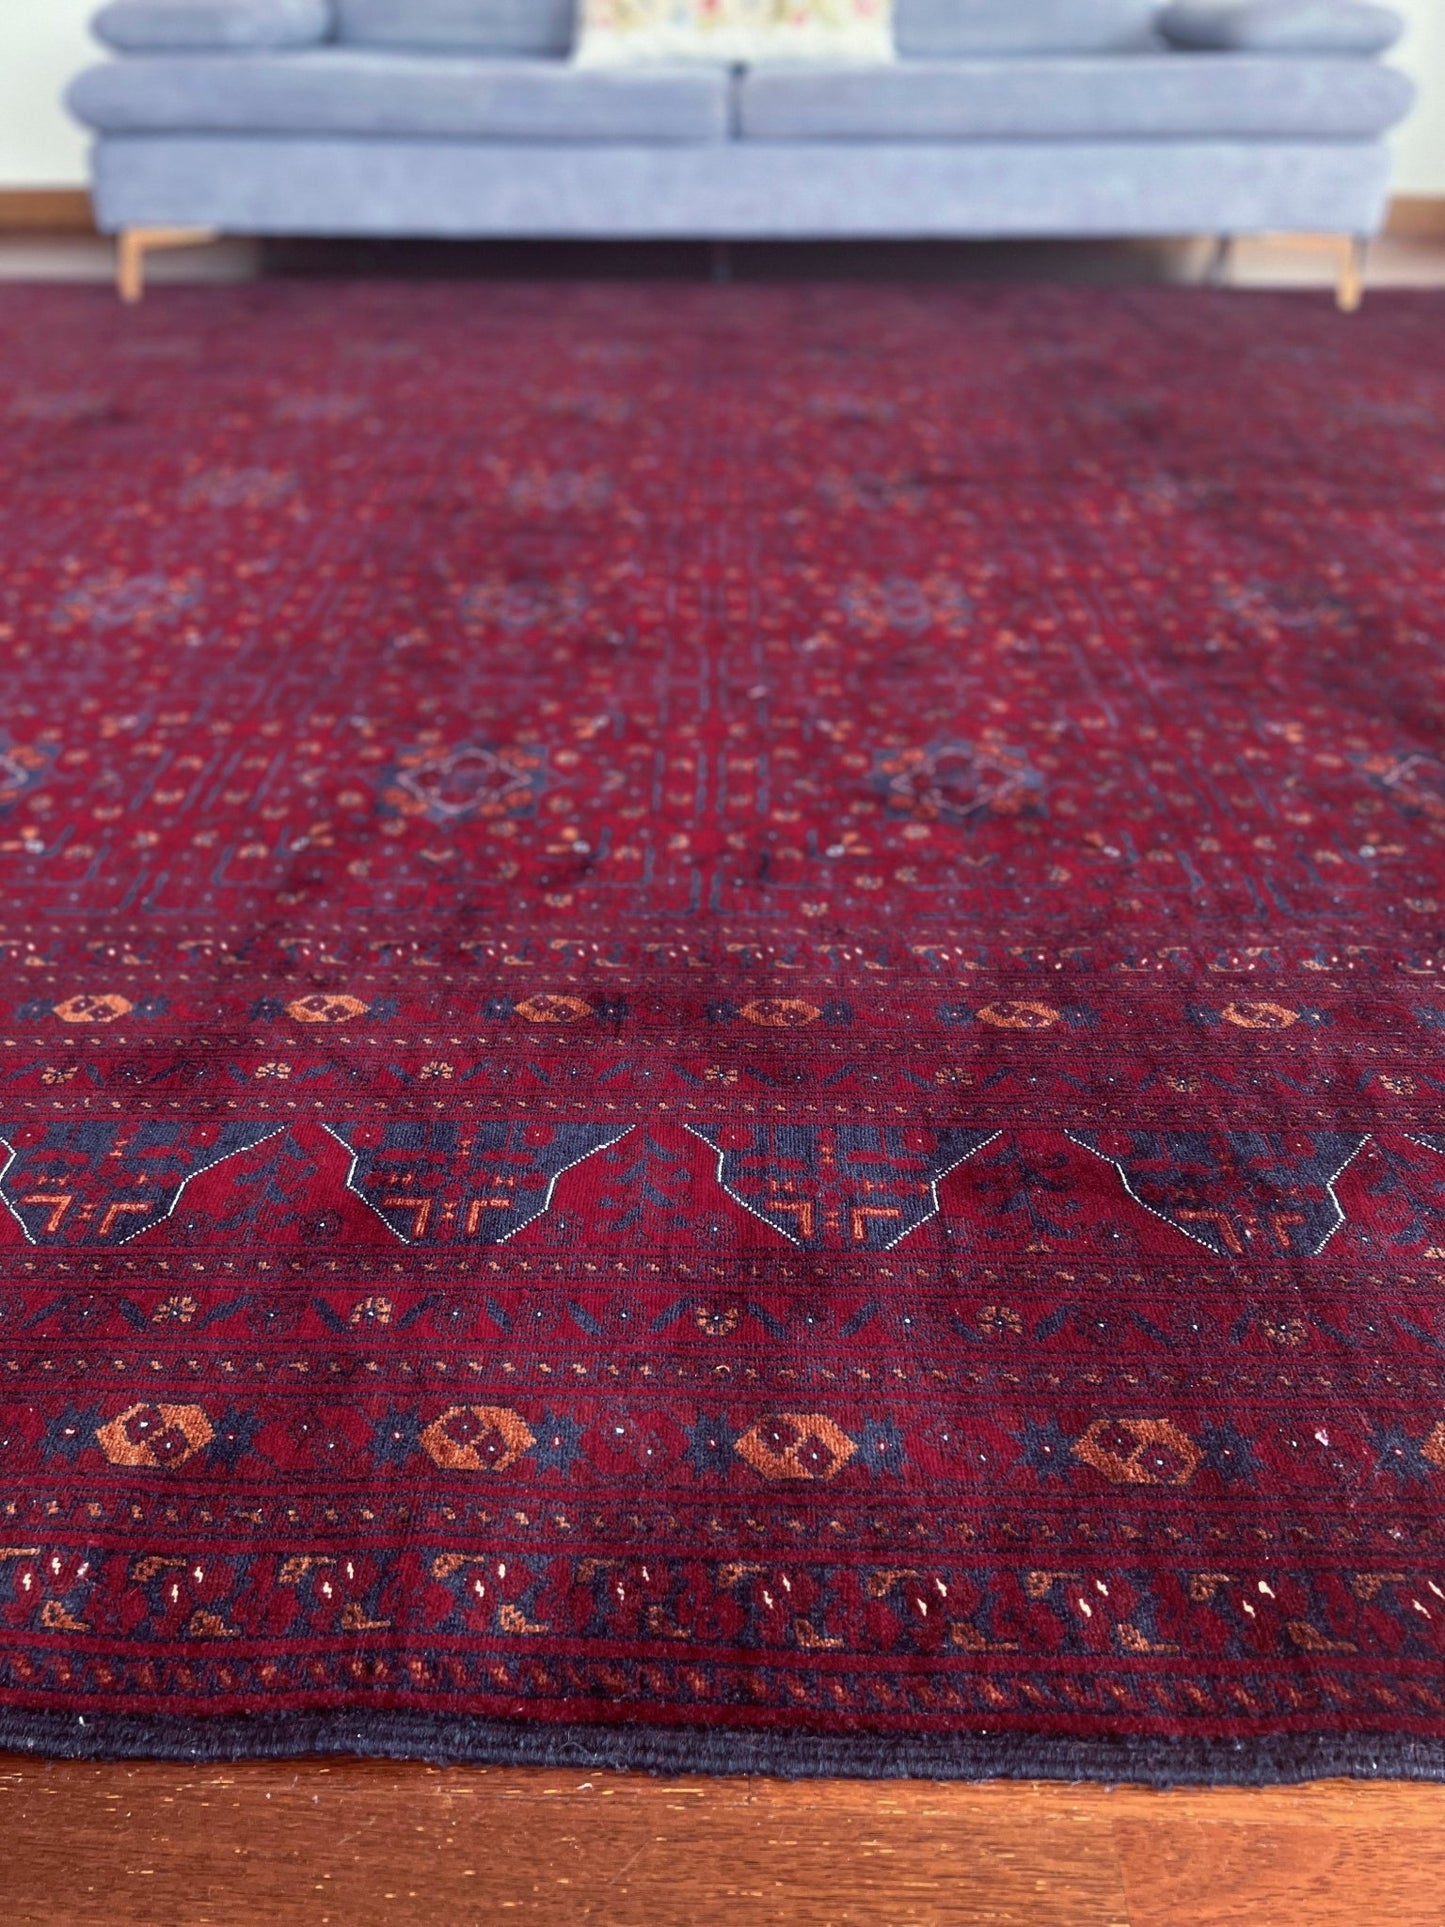 Large turkmen bilicik rug burgundy red navy blue oriental rug shop palo alto berkeley rug shopping san francisco bay area buy